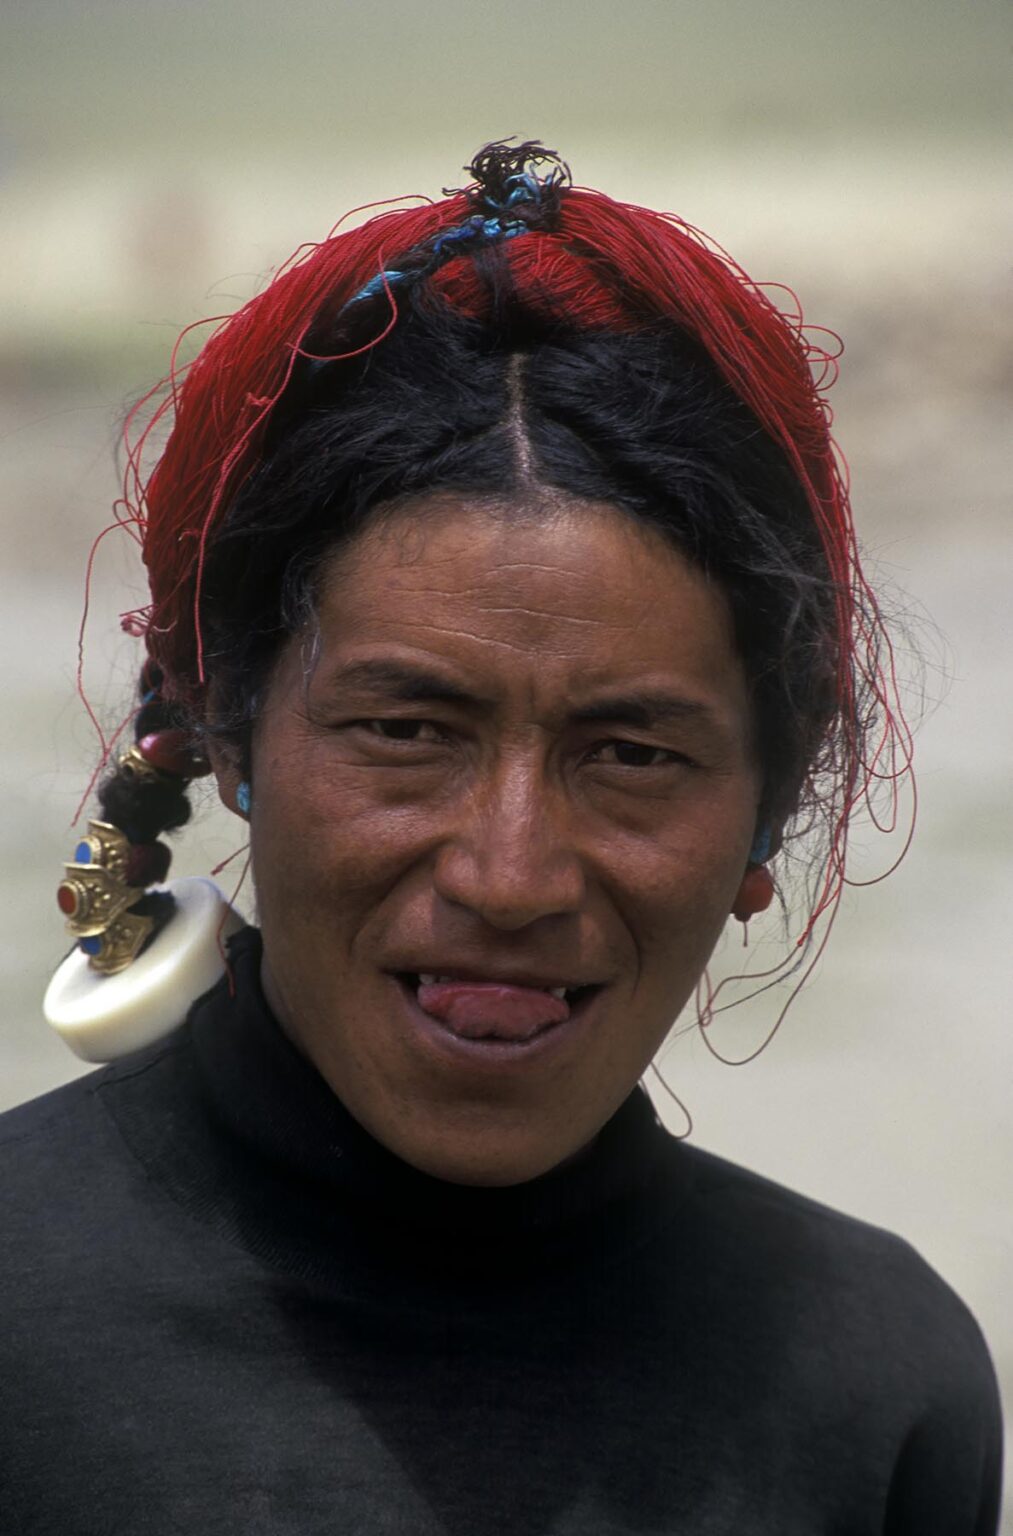 A male DROKPA (Tibetan nomadic yak herder) from KHAM wheres red tassles in his hair - SOUTH WESTERN, TIBET